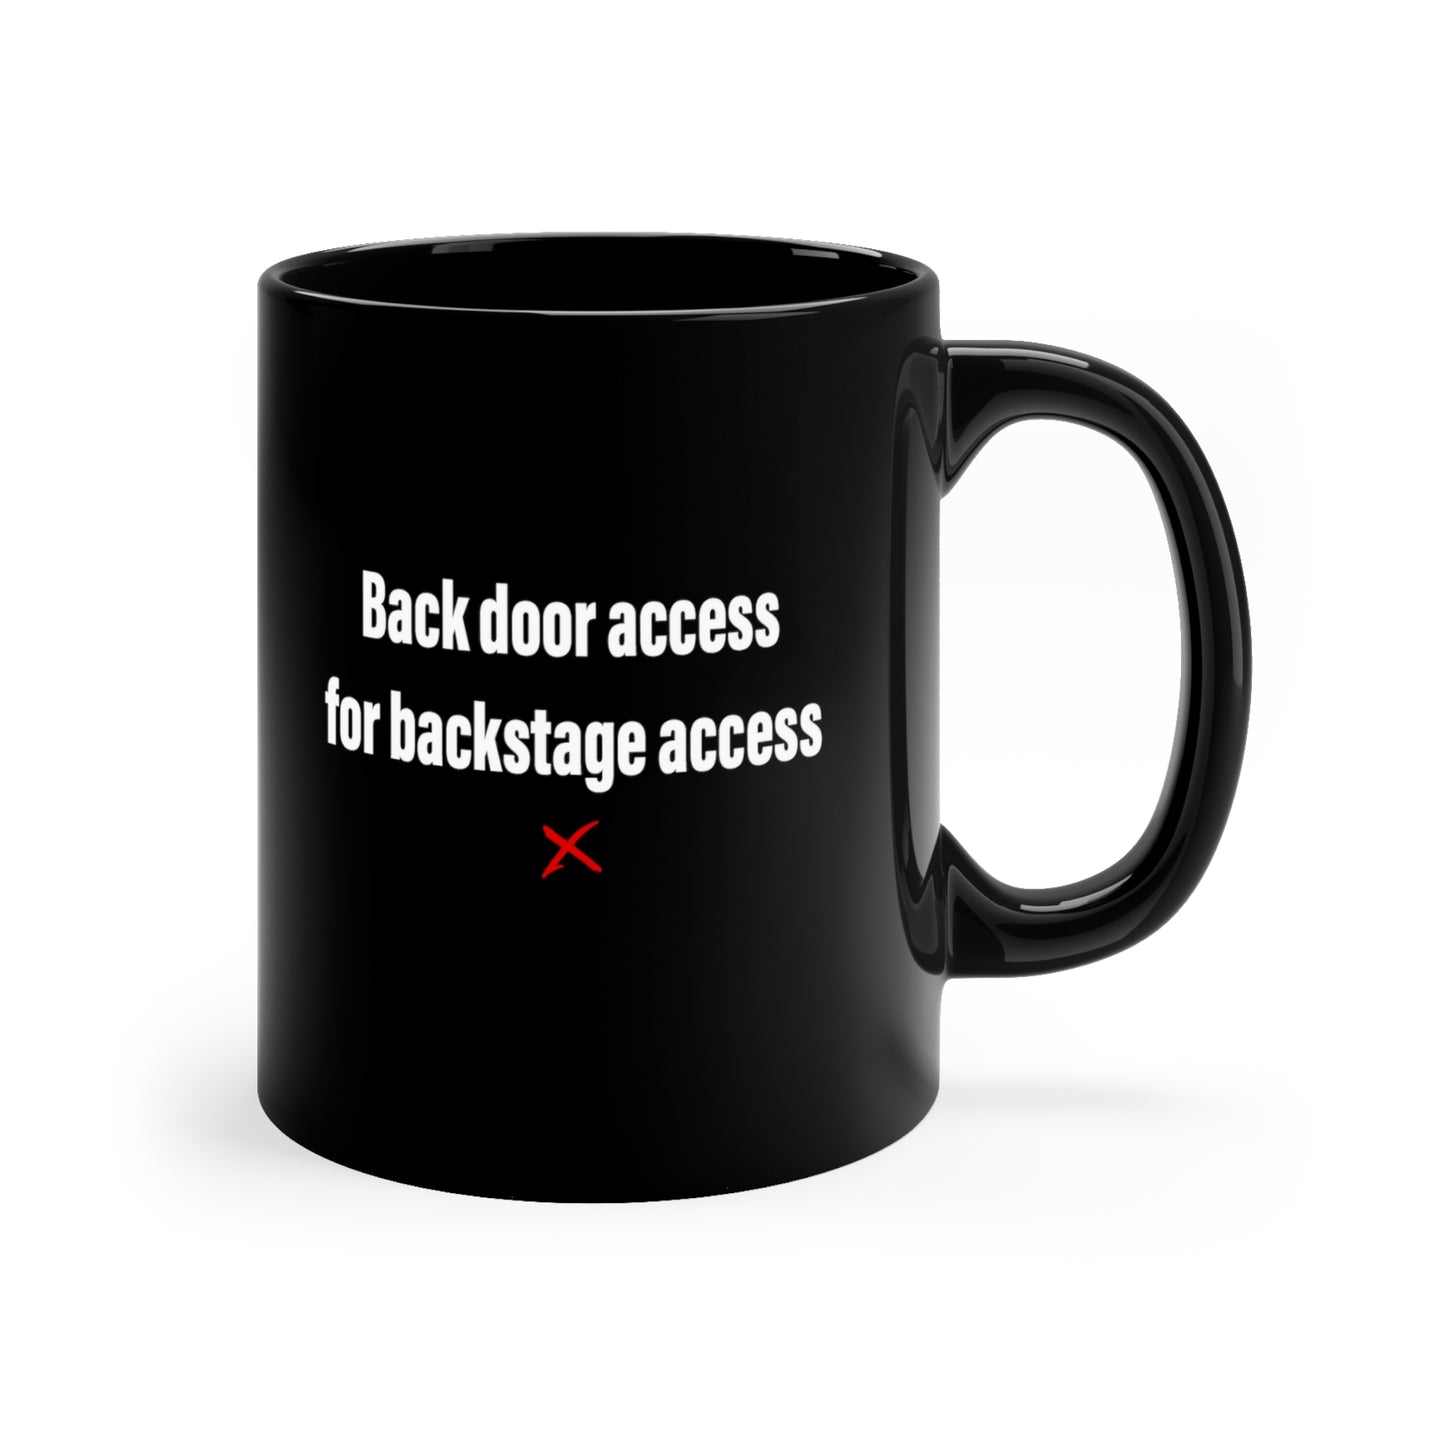 Back door access for backstage access - Mug